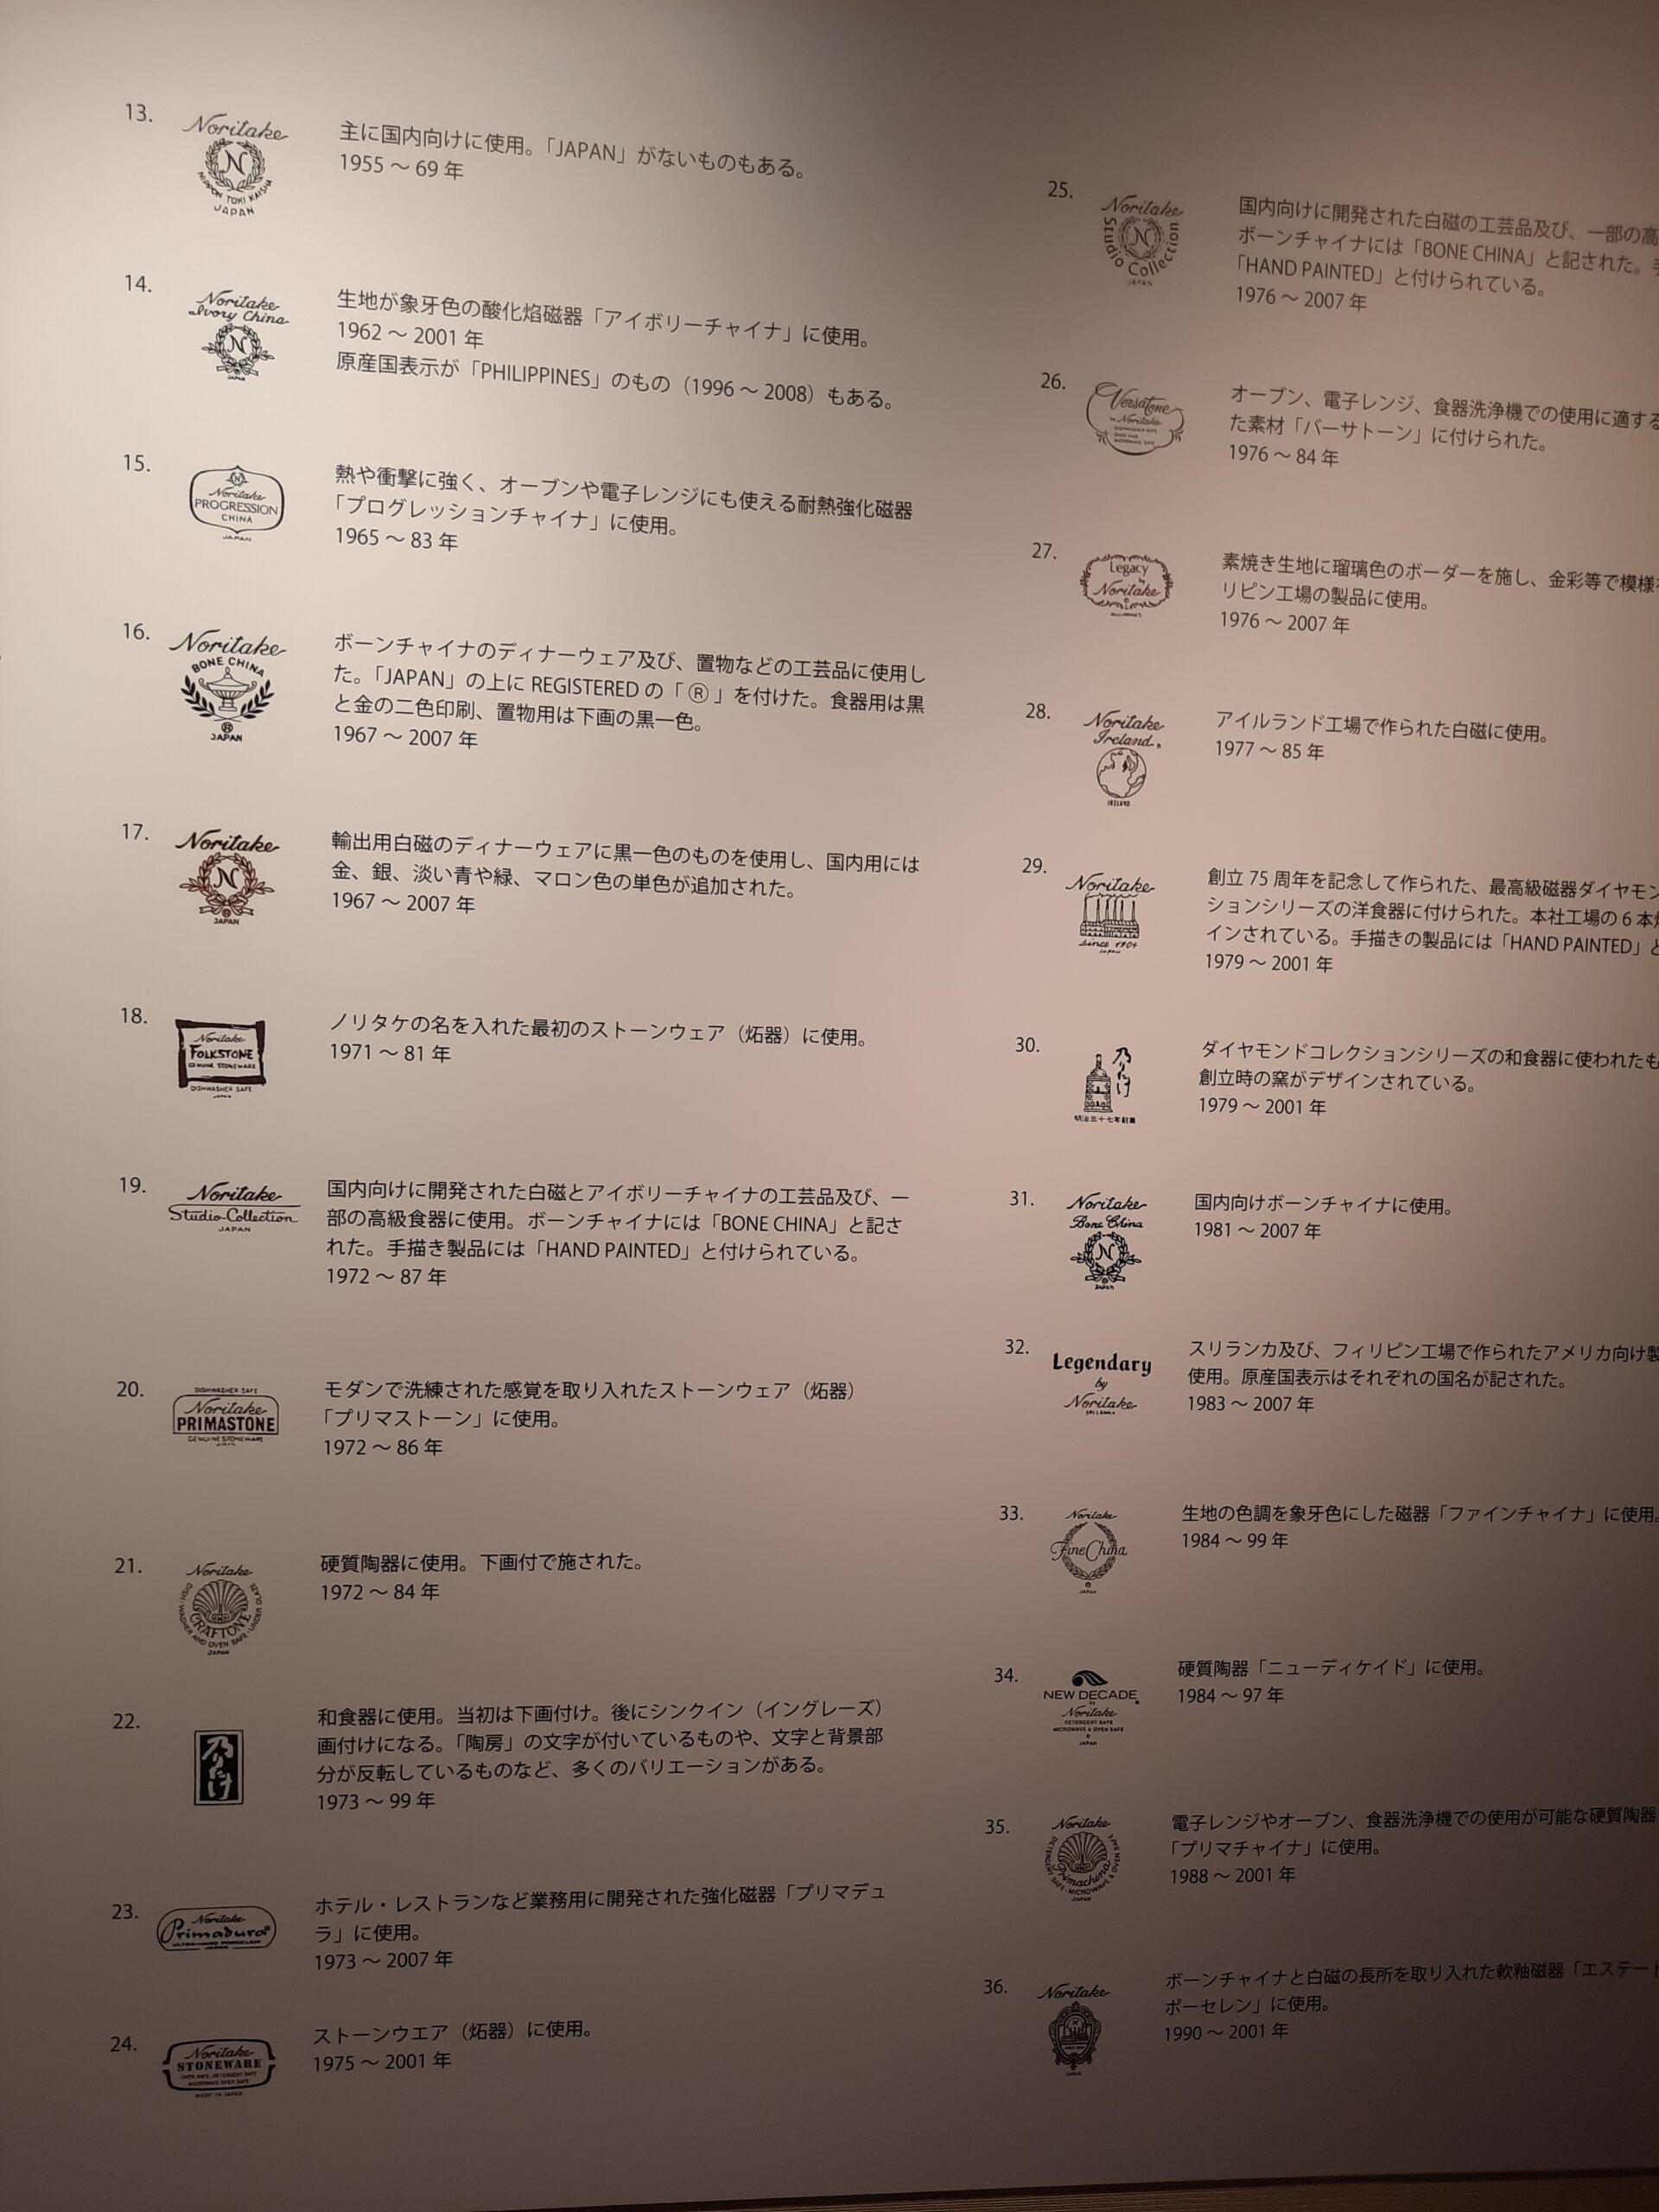 drawings, kanji, symbols, japanese words